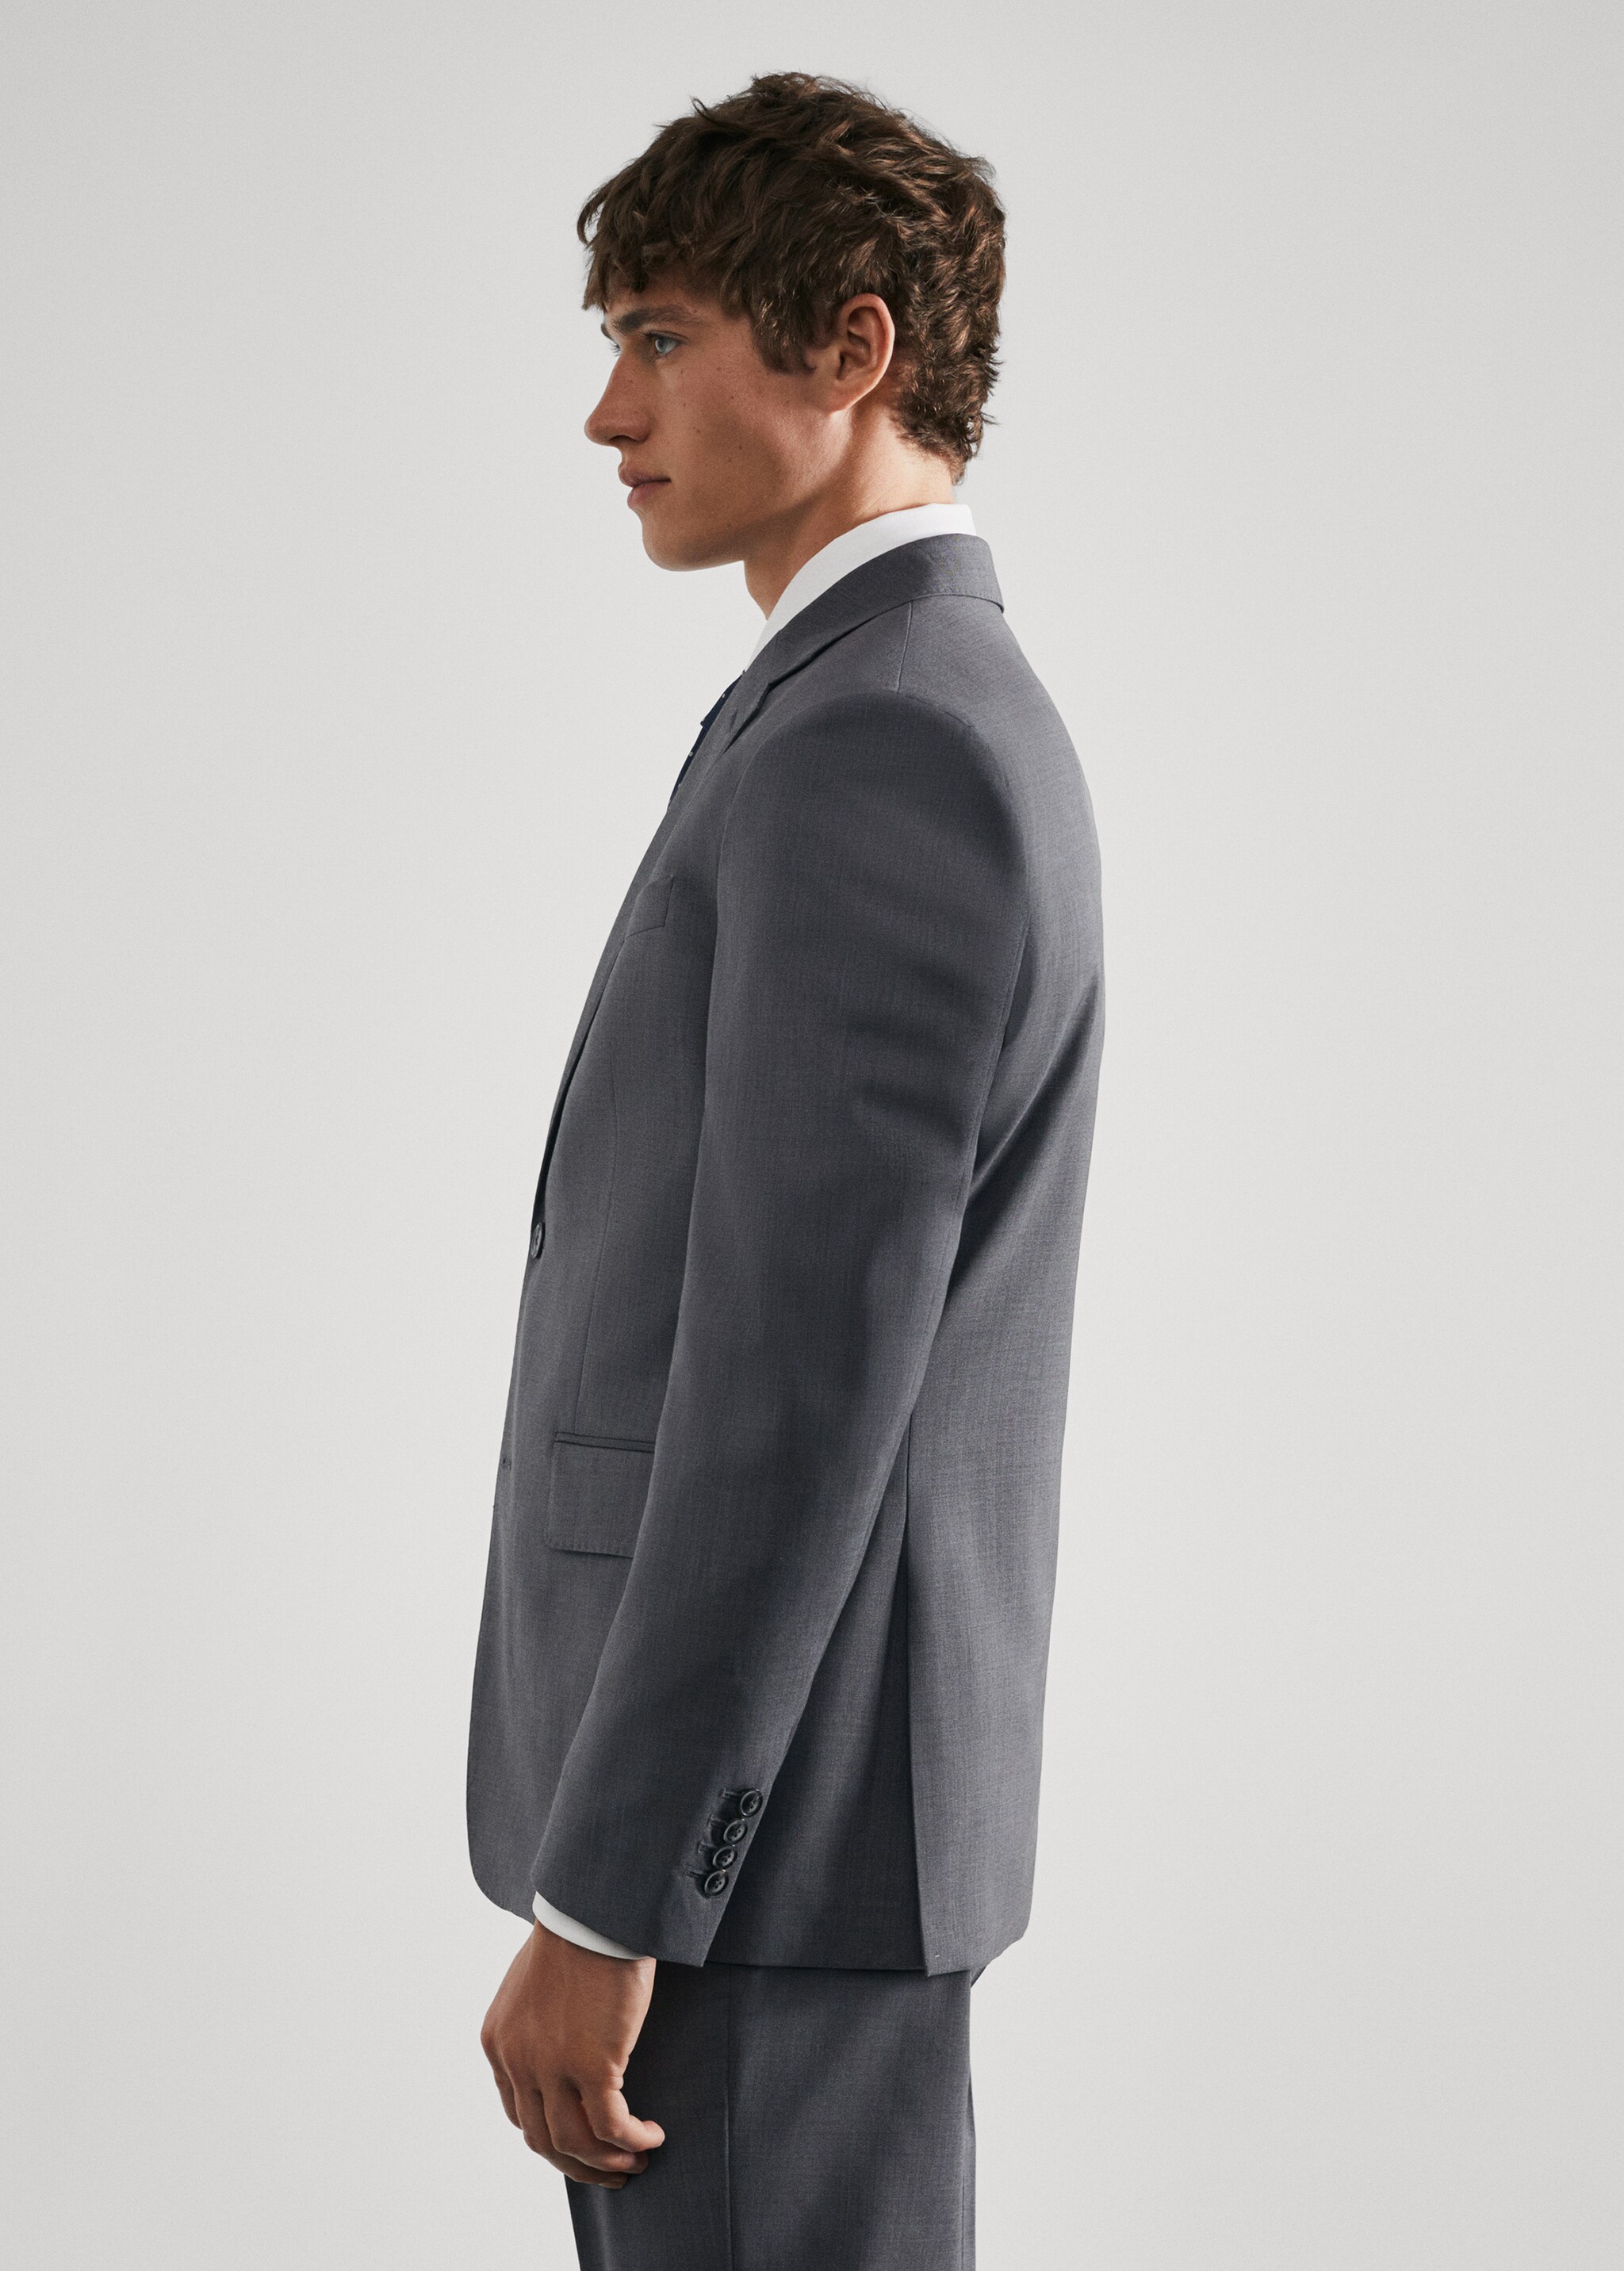 100% virgin wool suit jacket - Details of the article 2